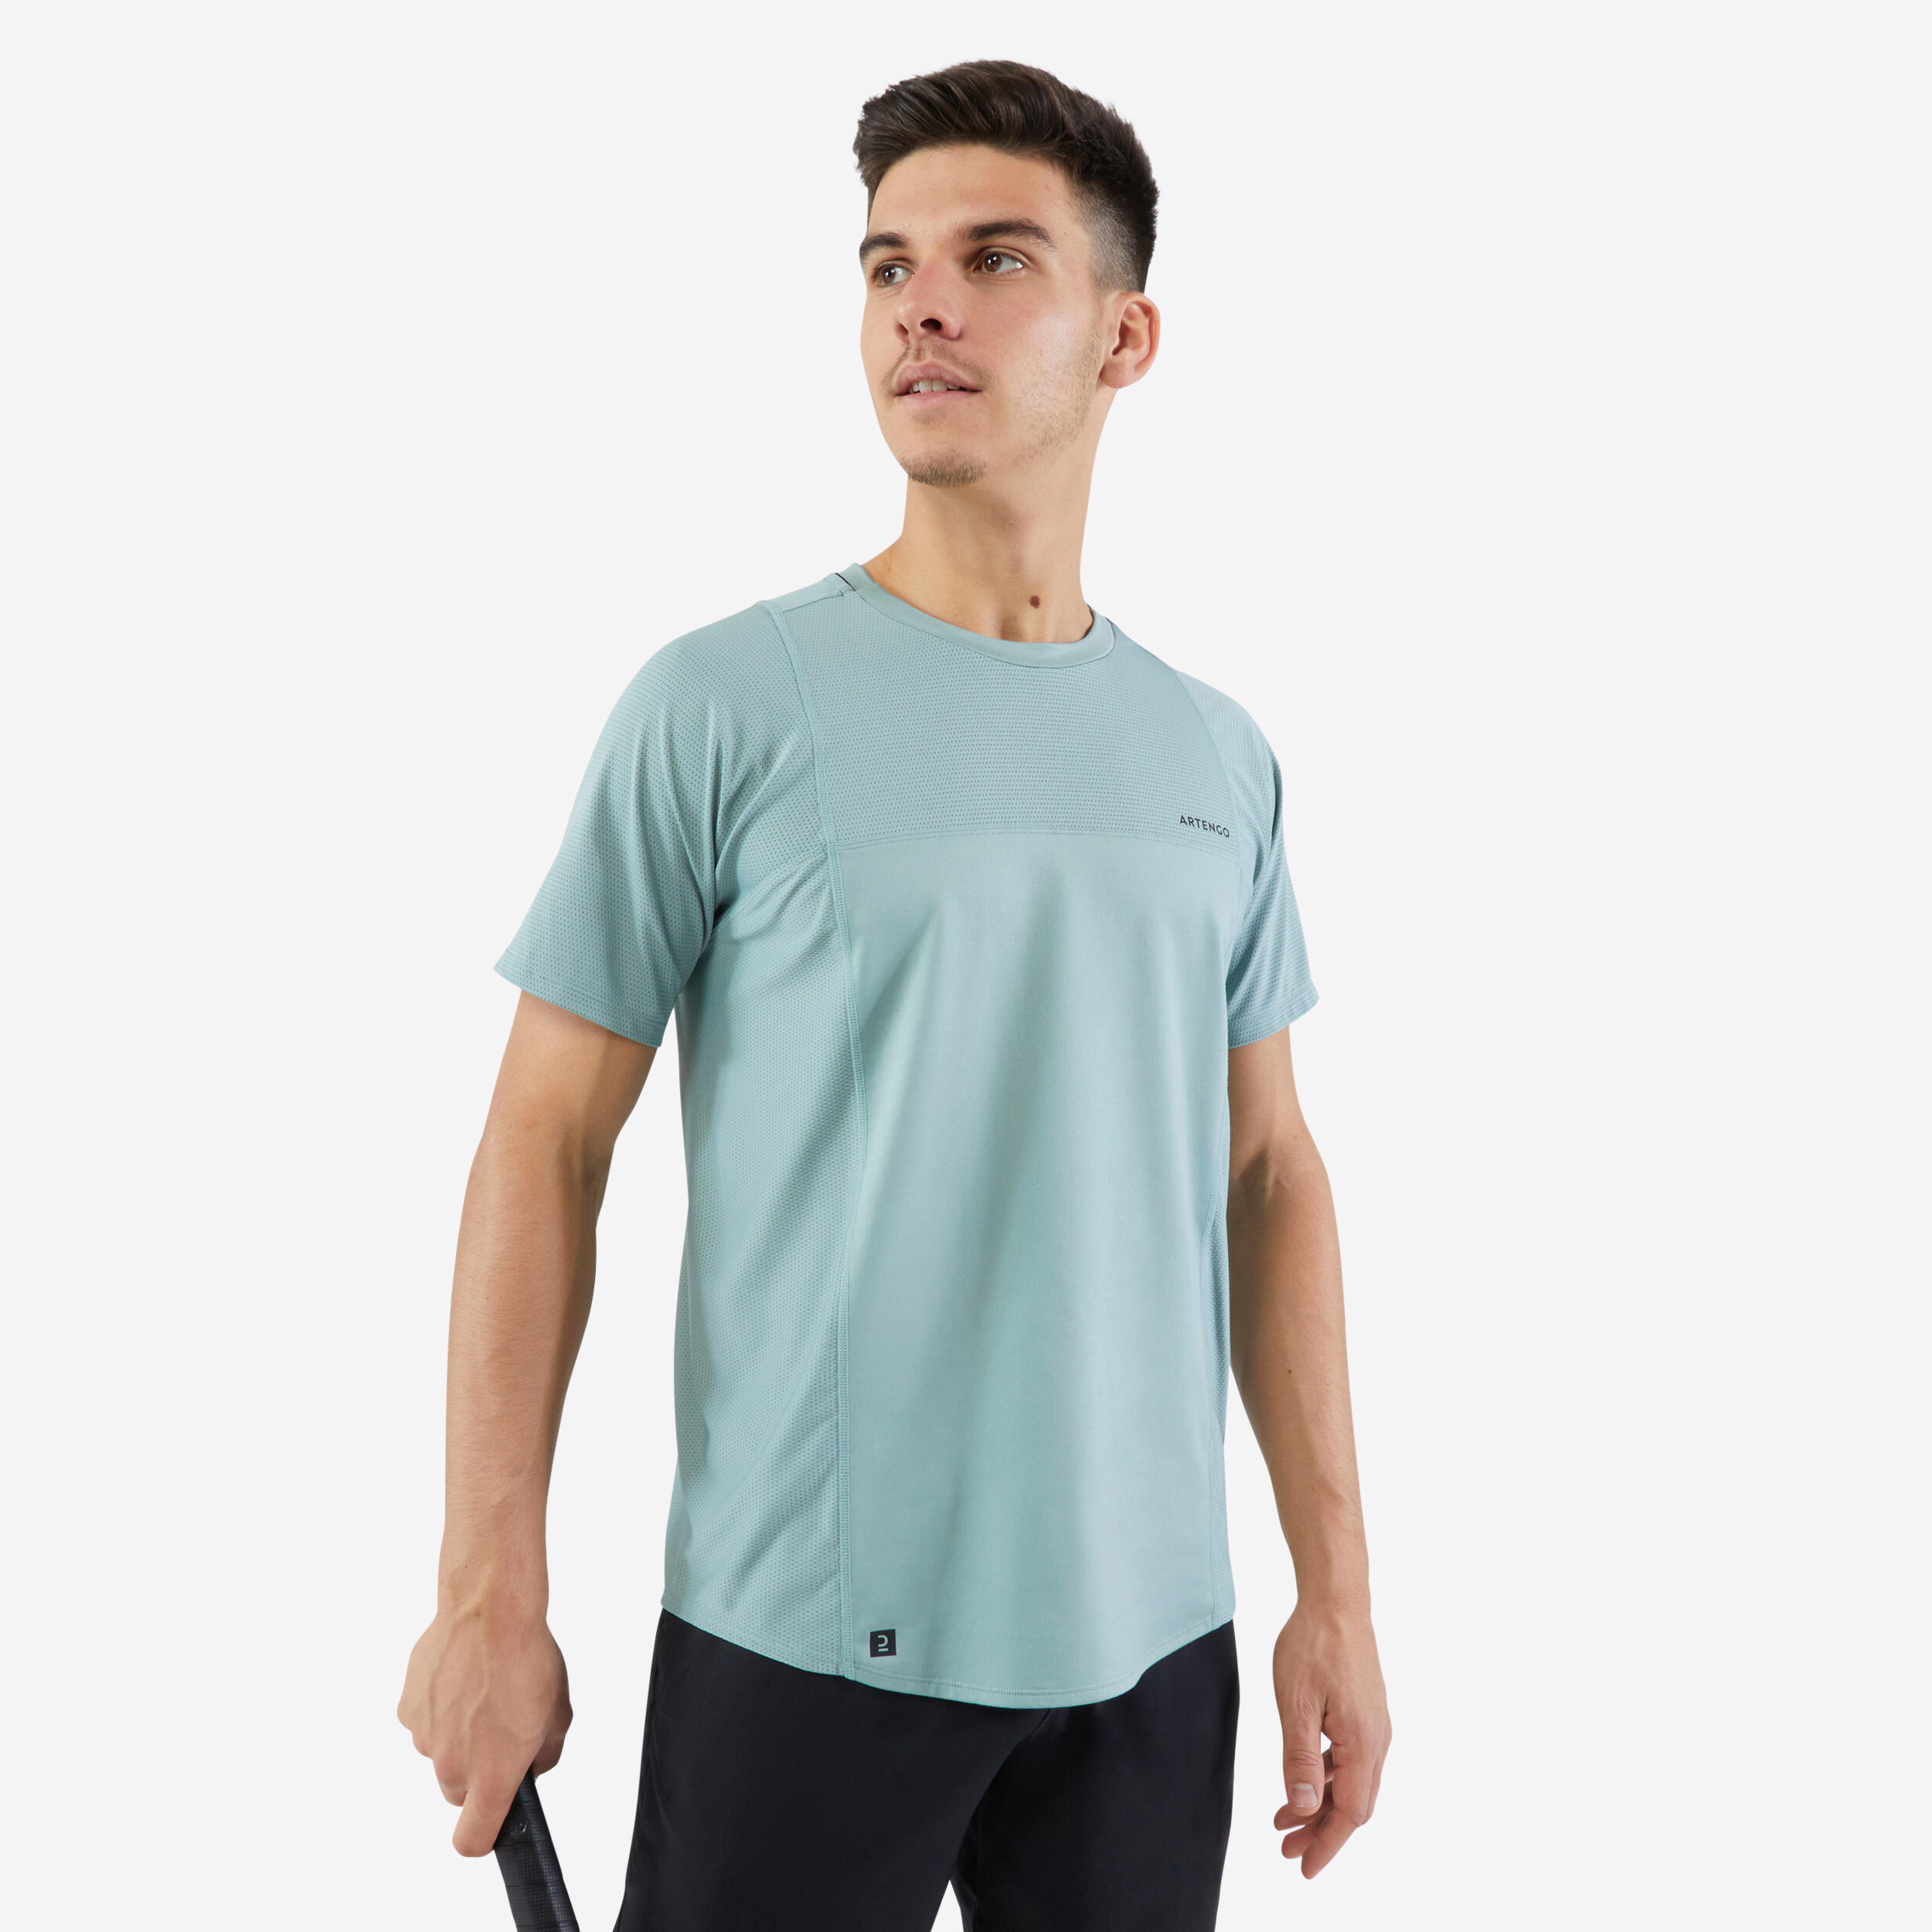 Men's Short-Sleeved Tennis T-Shirt